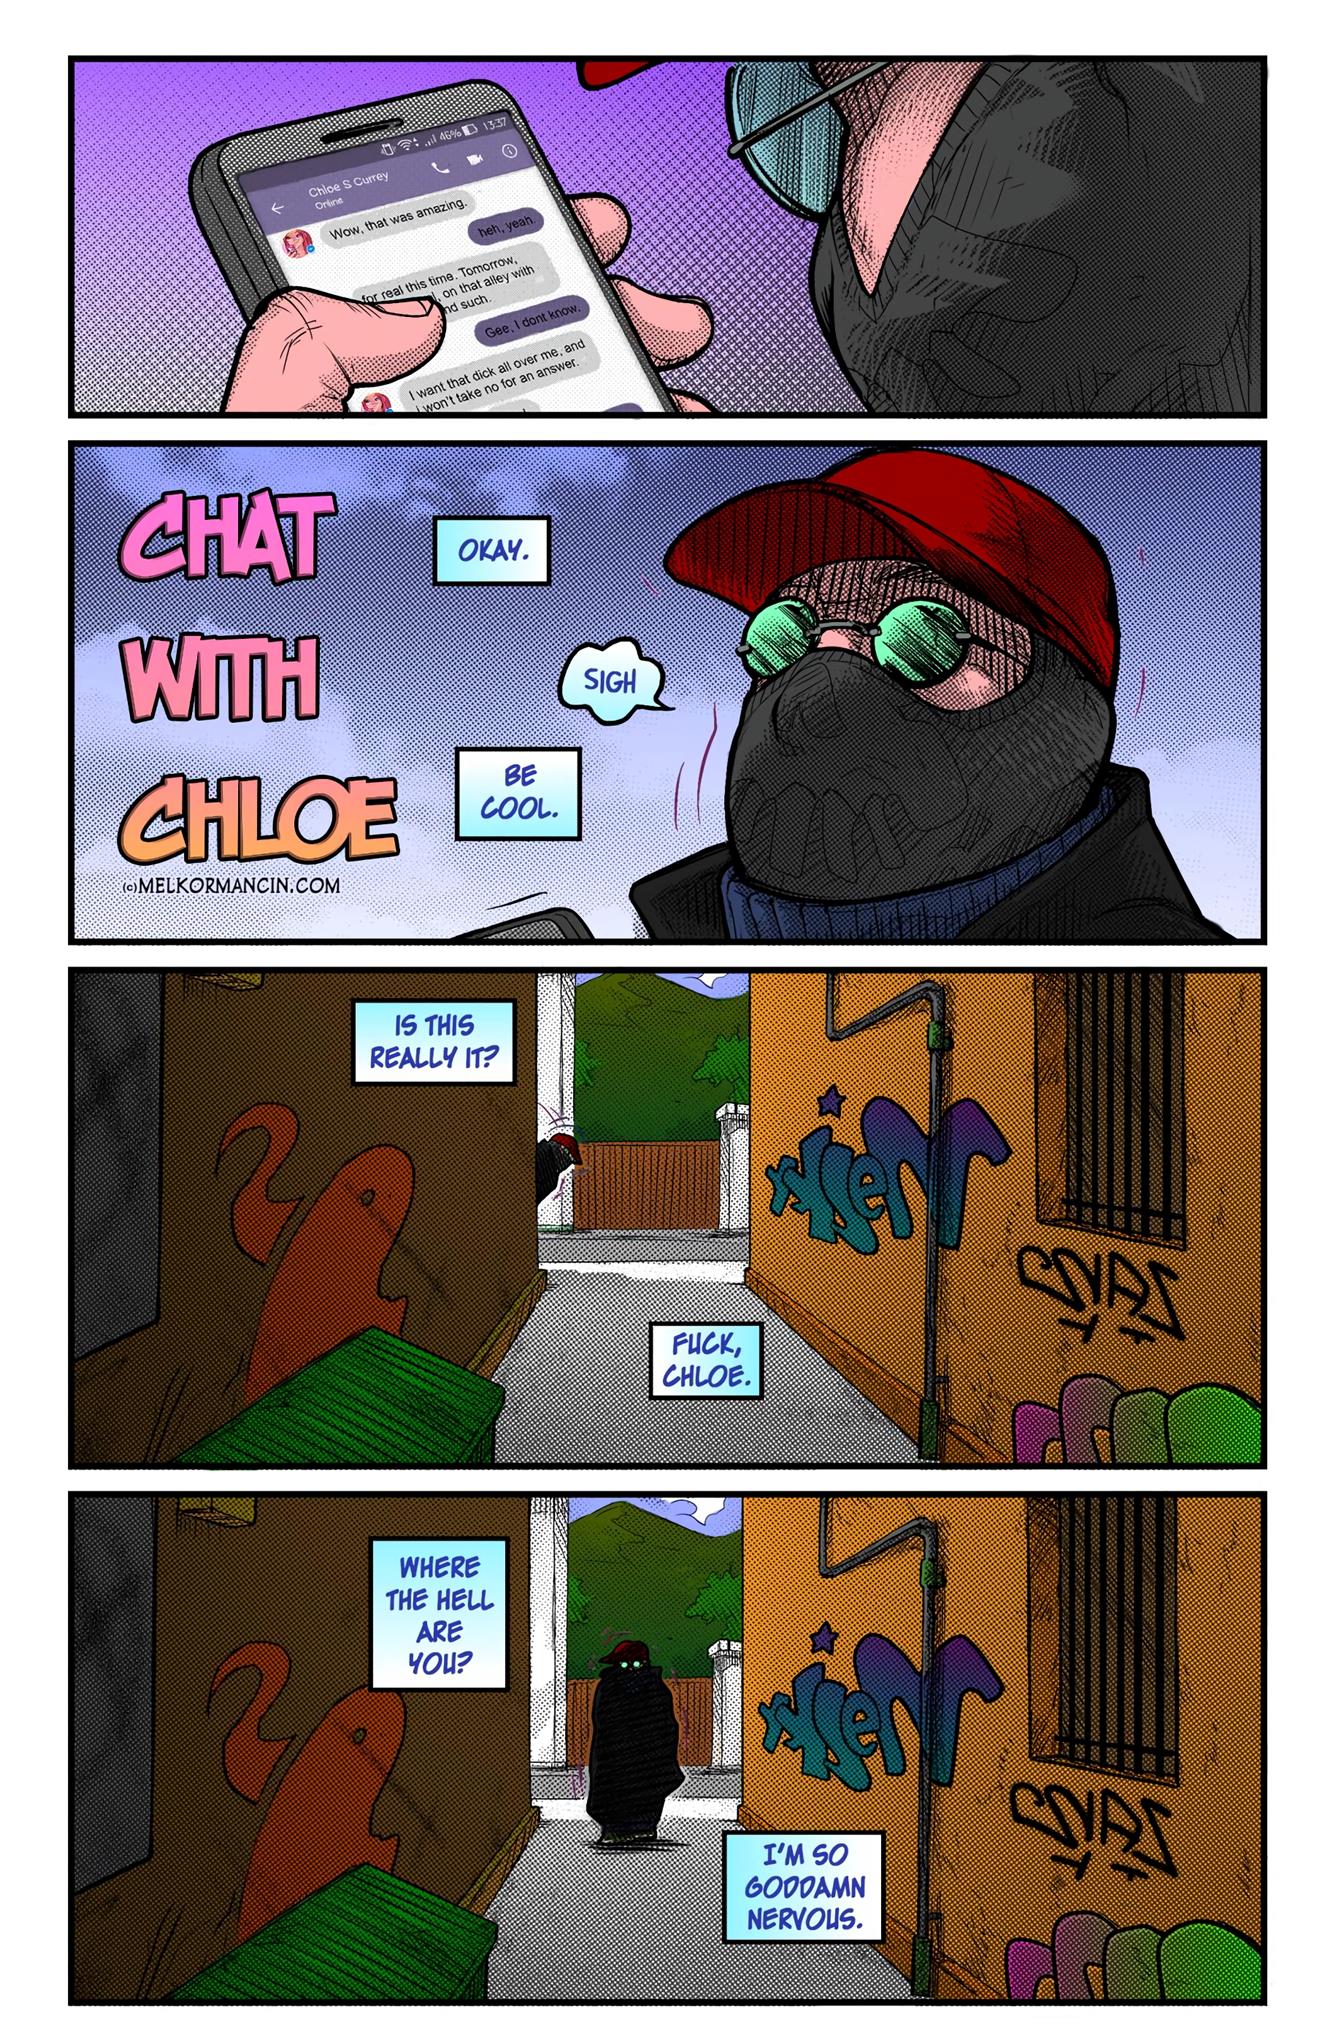 Chat with Chloe [Melkor Mancin]